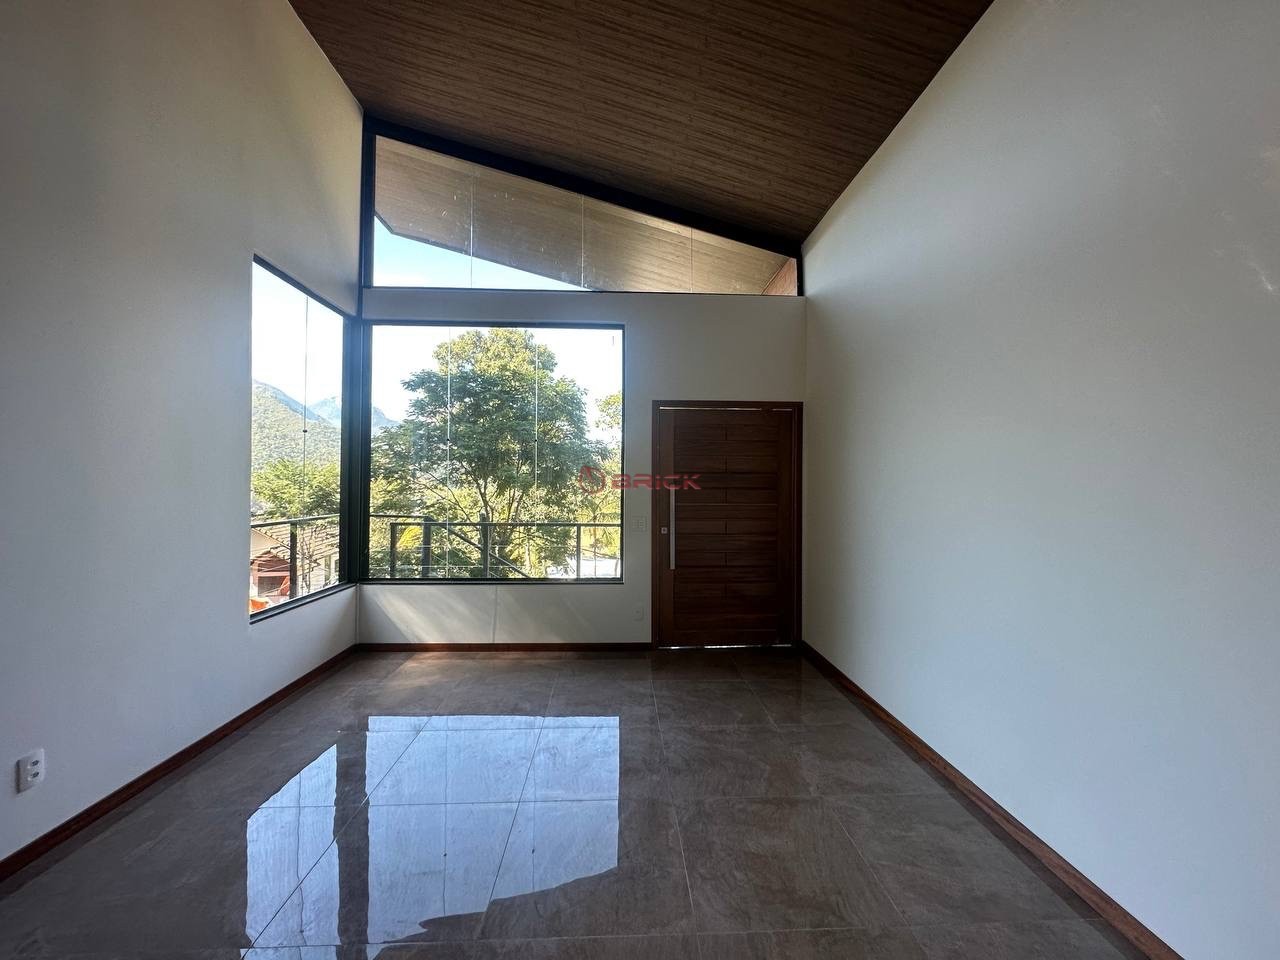 Casa à venda em Vargem Grande, Teresópolis - RJ - Foto 4